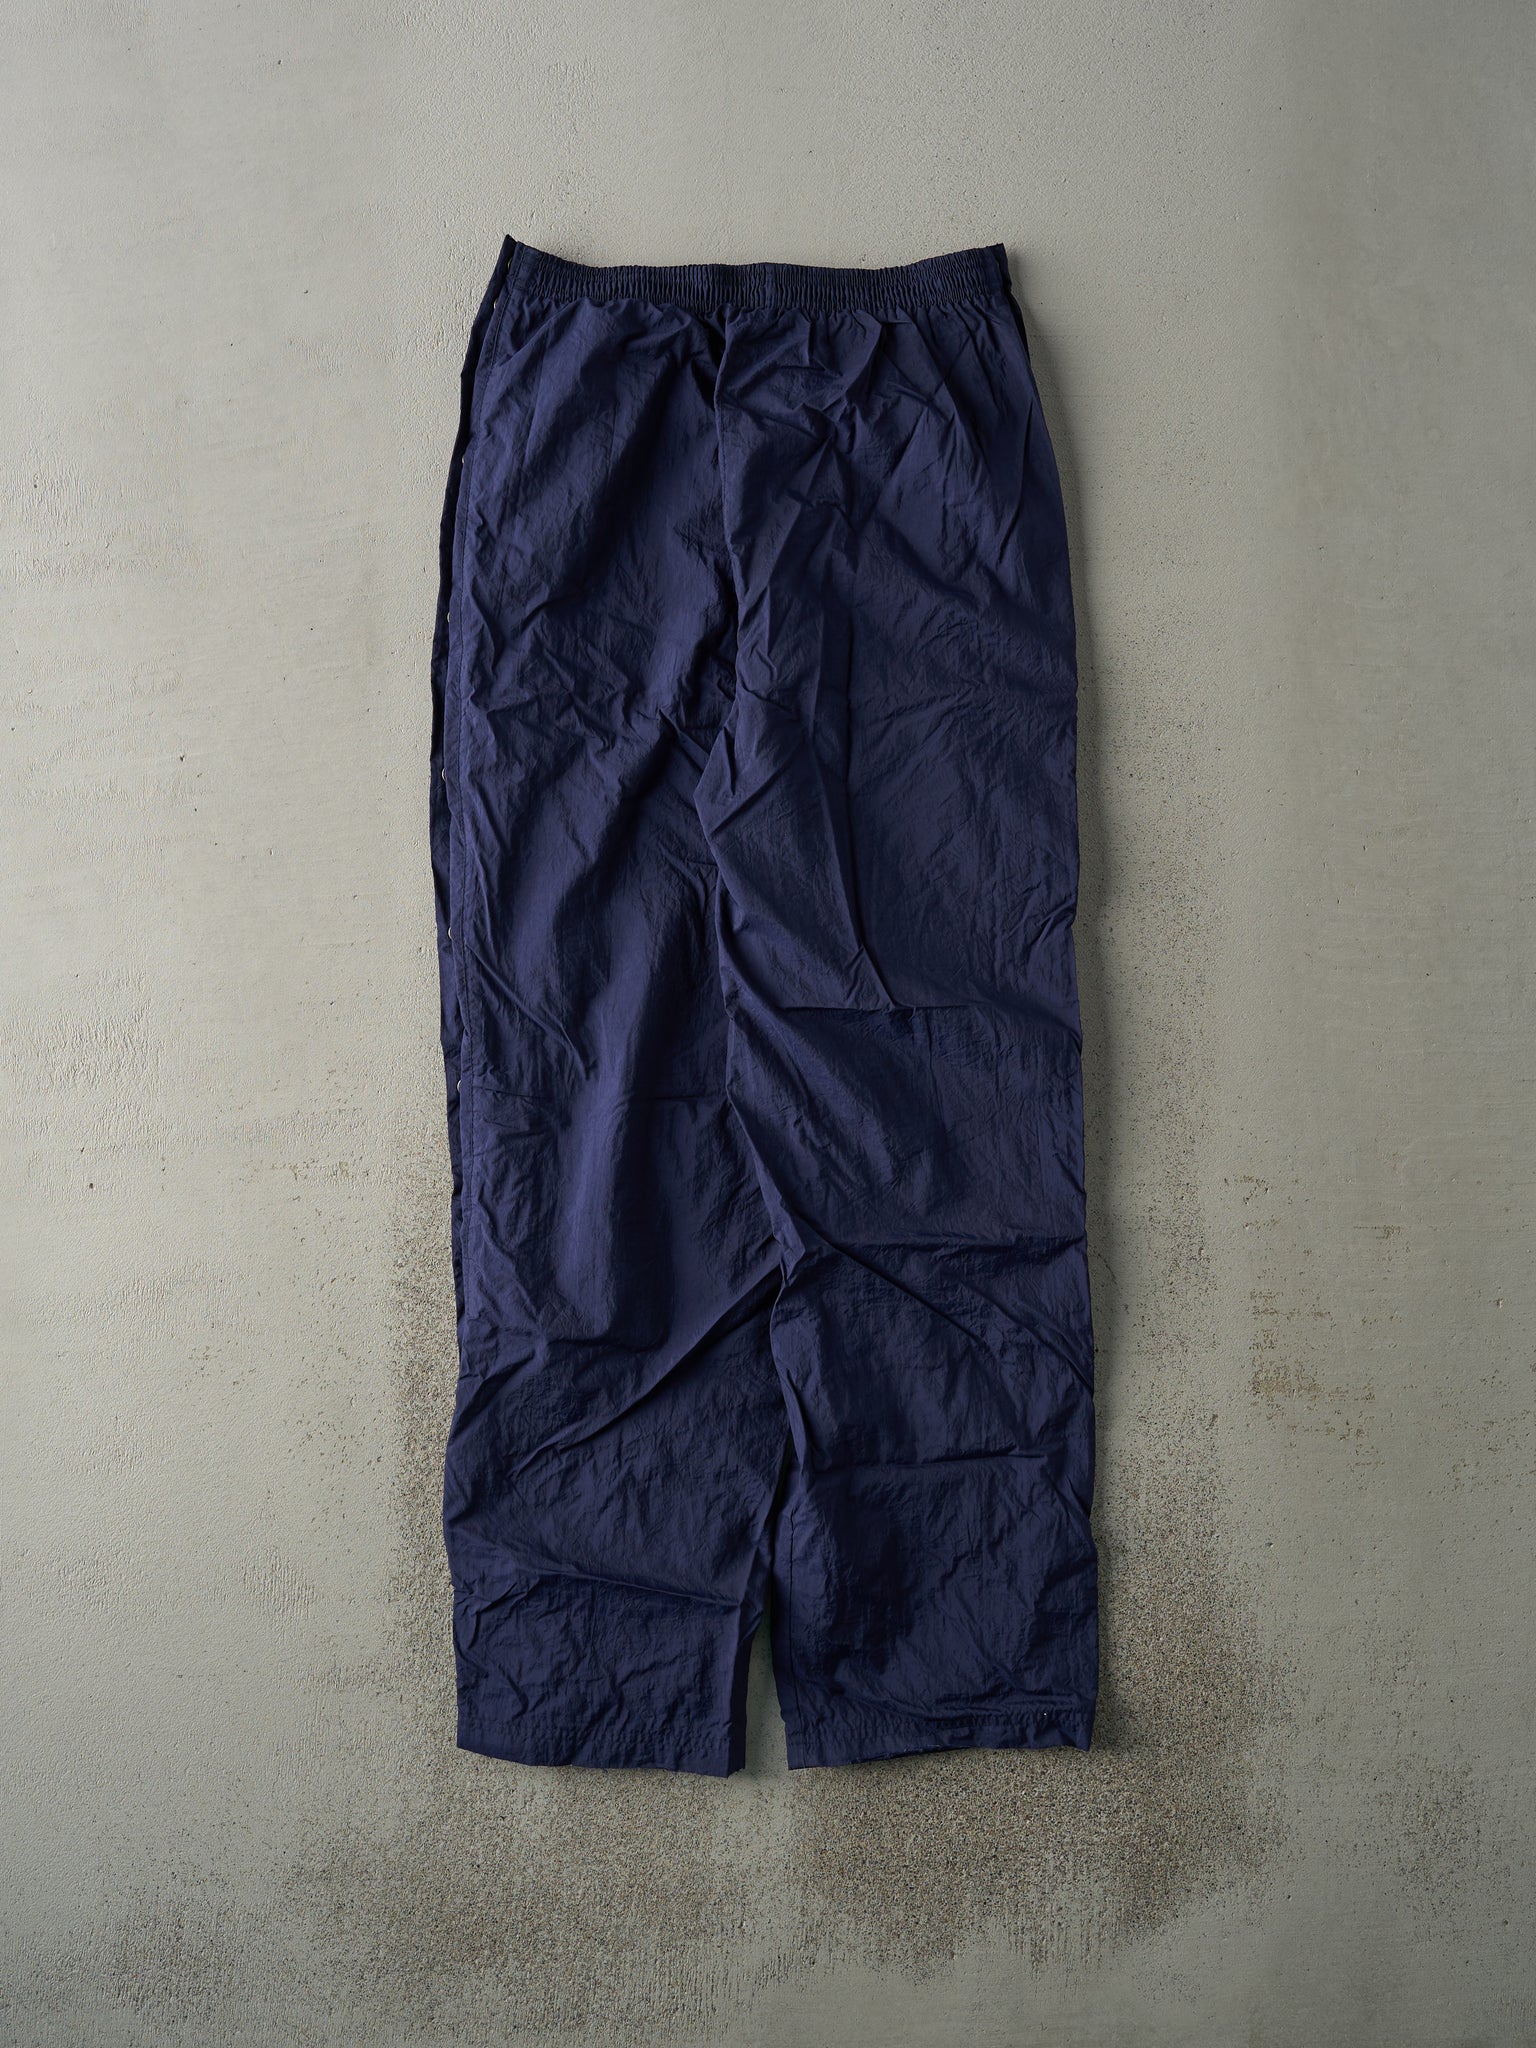 Vintage Y2K Navy Blue Adidas Tear Away Track Pants (29x30)